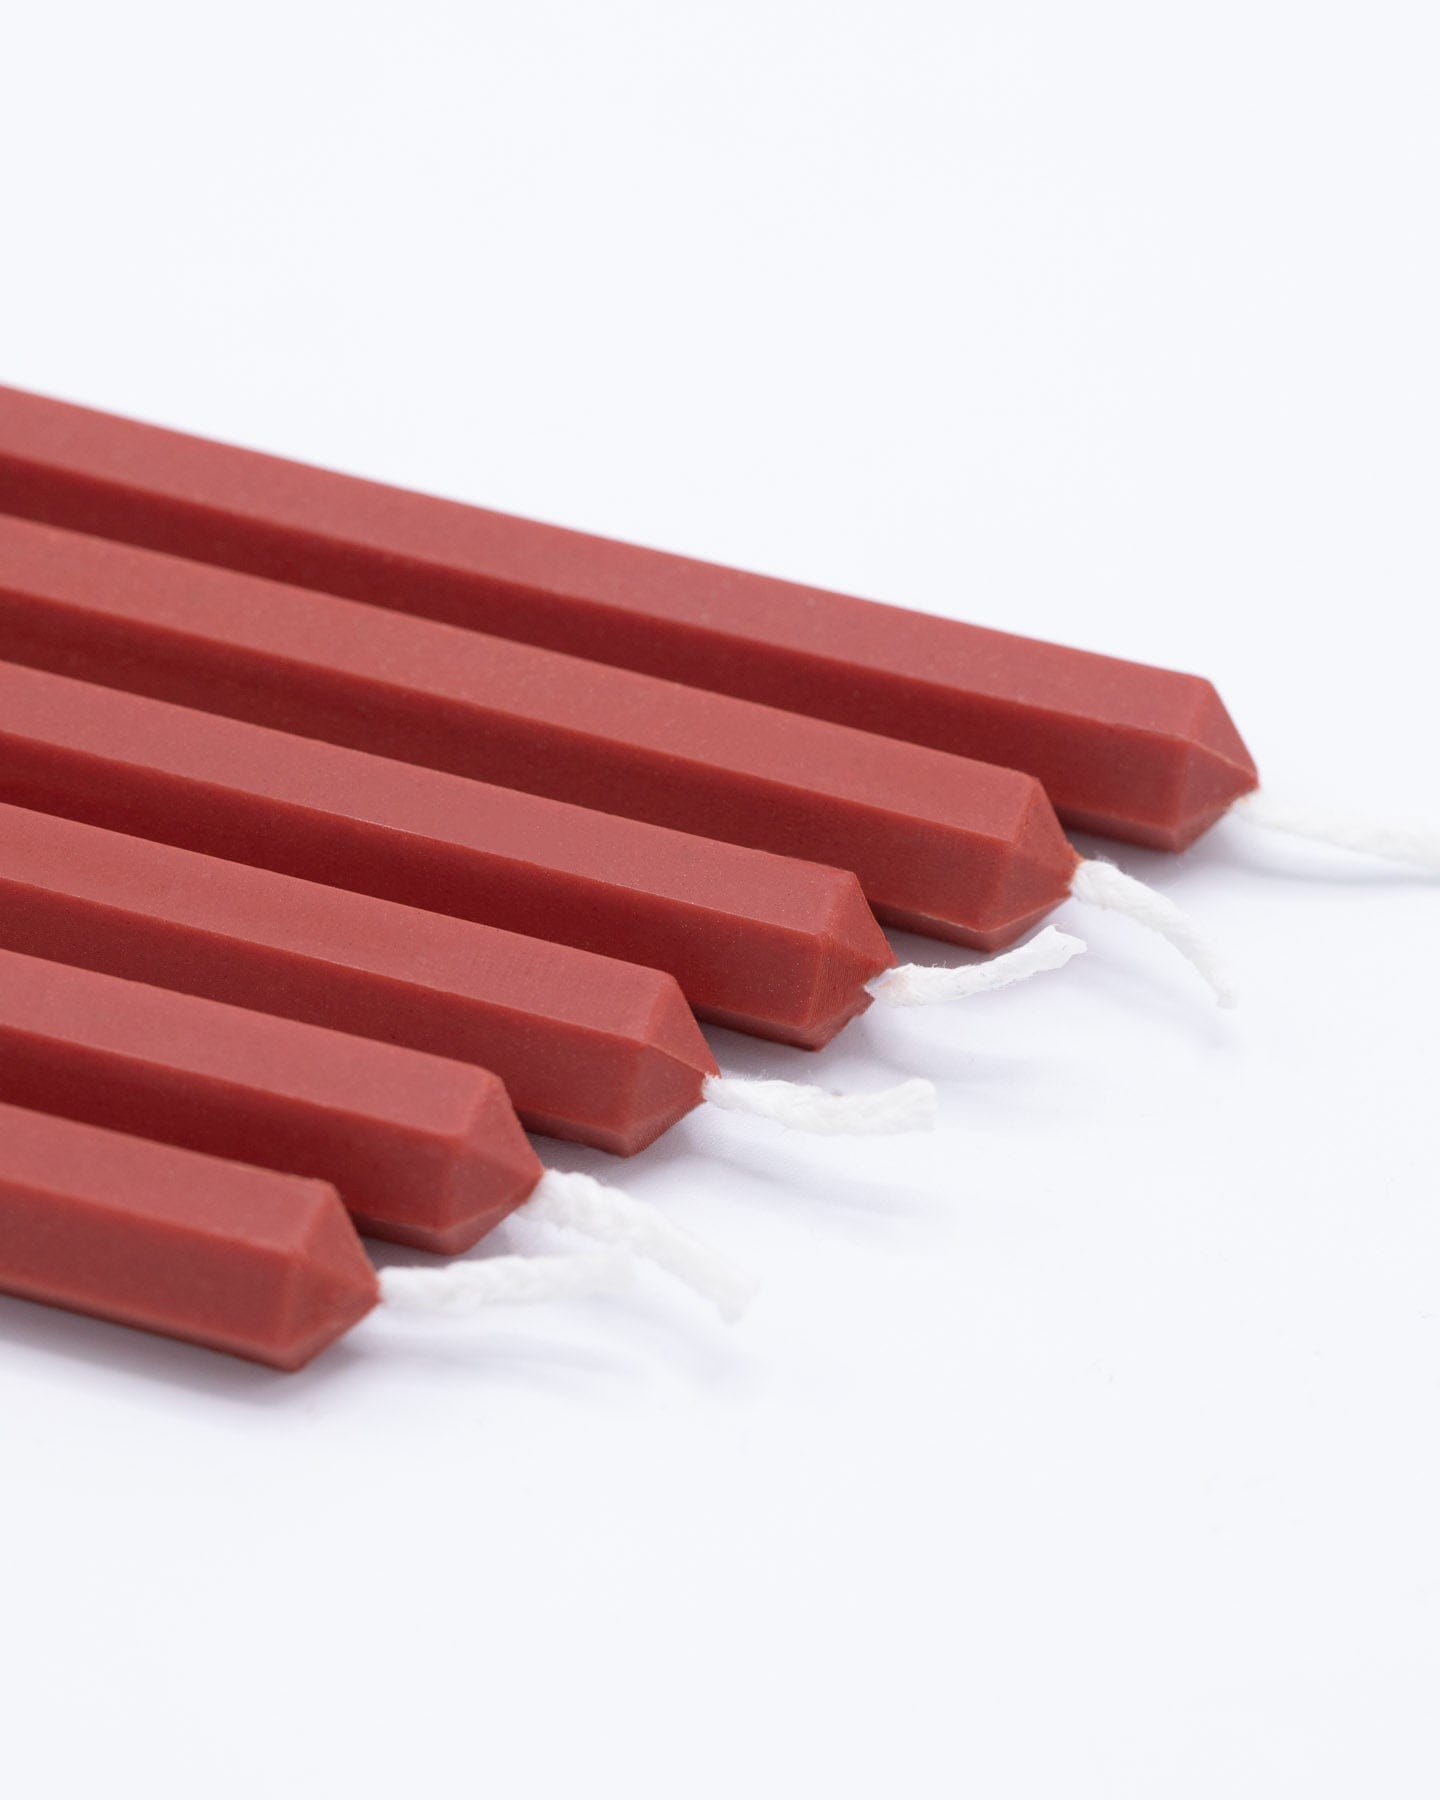 Classic Red Sealing Wax Sticks